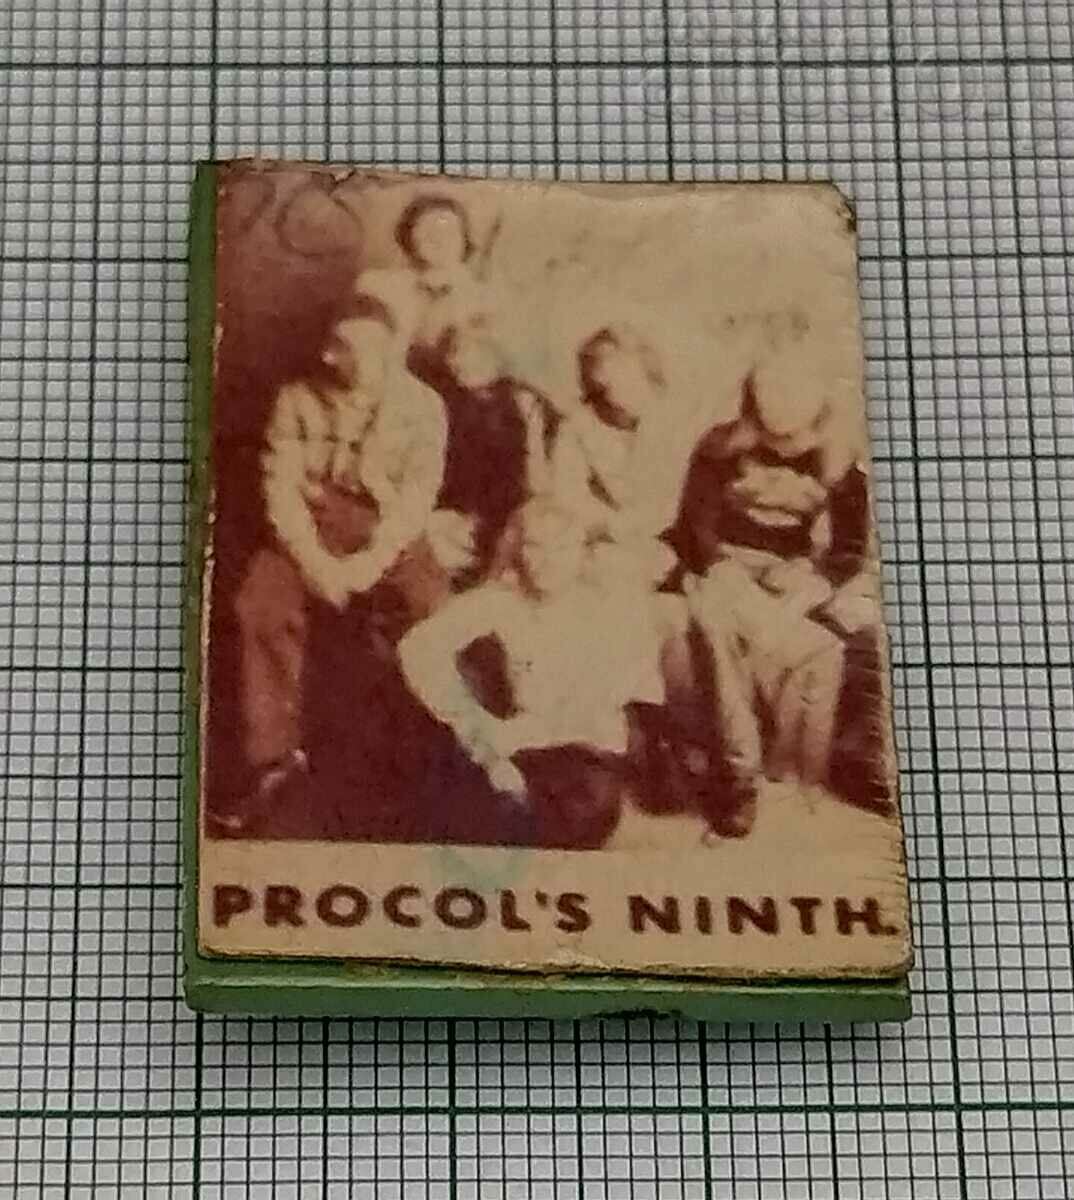 PROCOL'S NINTH MUSIC BADGE